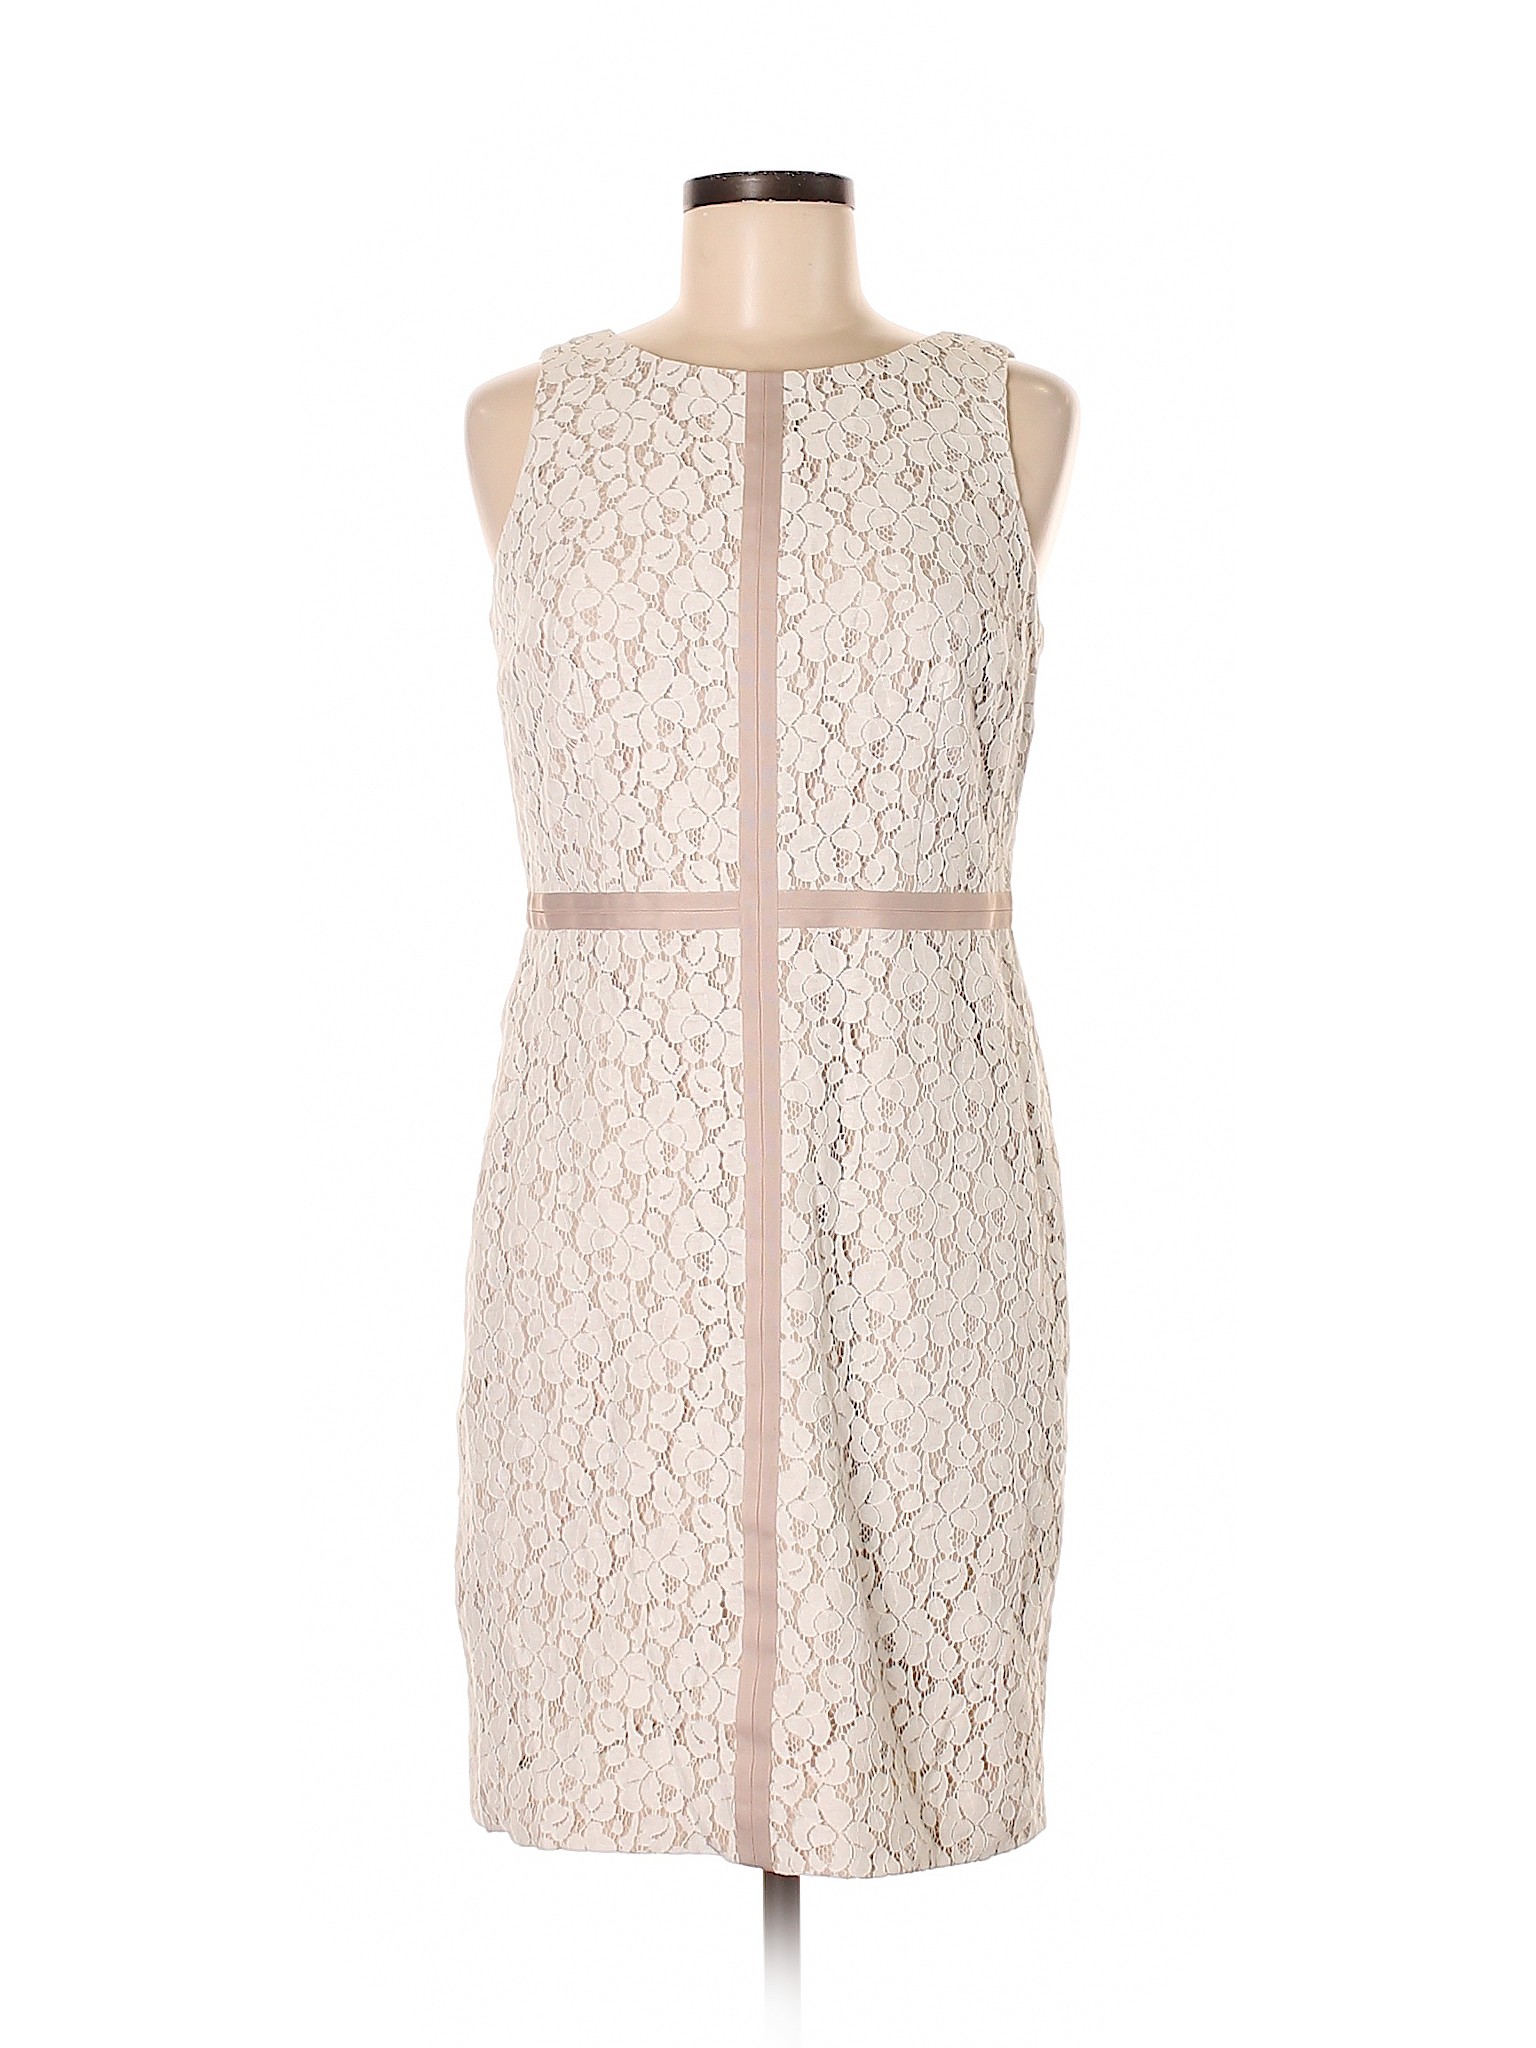 NWT Ann Taylor Factory Women Ivory Casual Dress 6 Petite | eBay